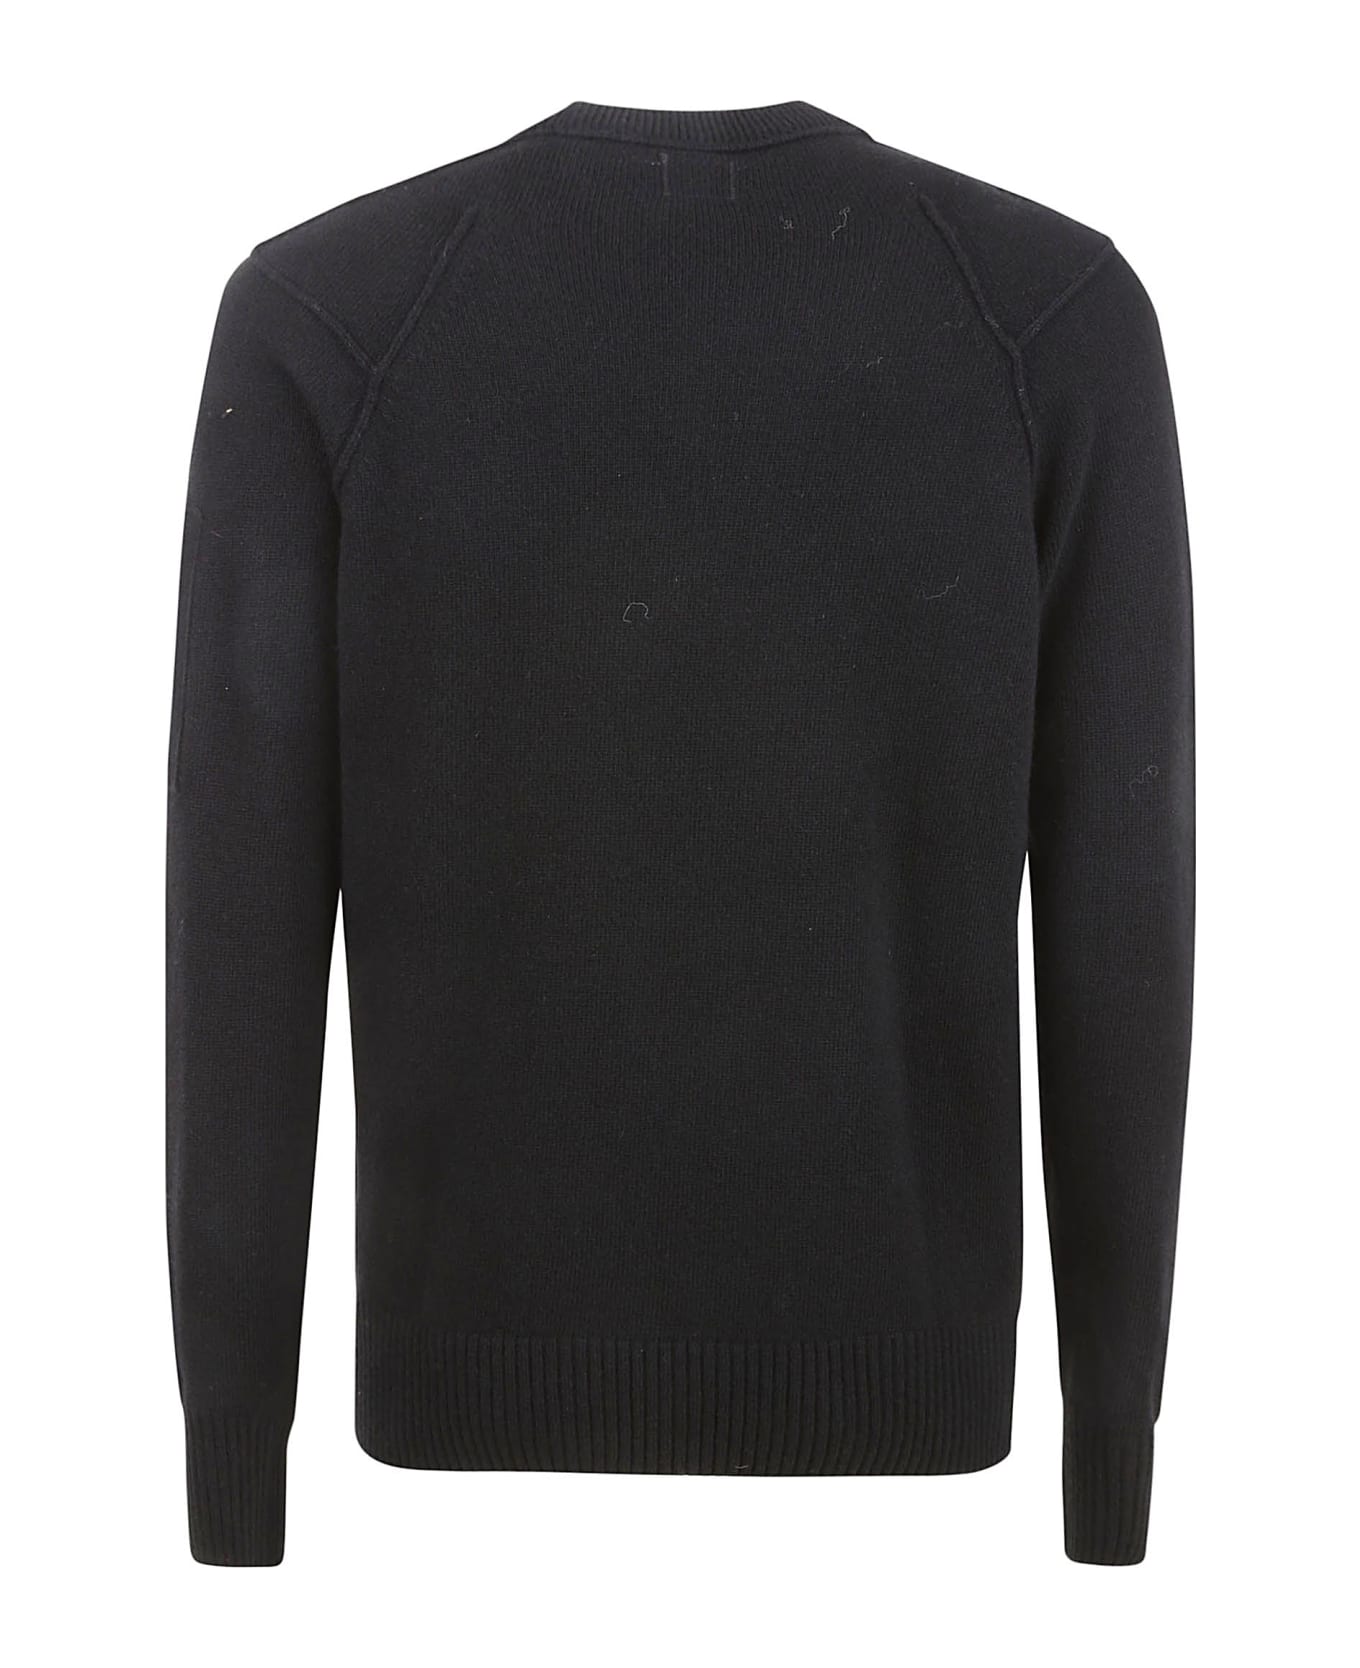 C.P. Company Rib Trim Plain Crewneck Sweater - Black